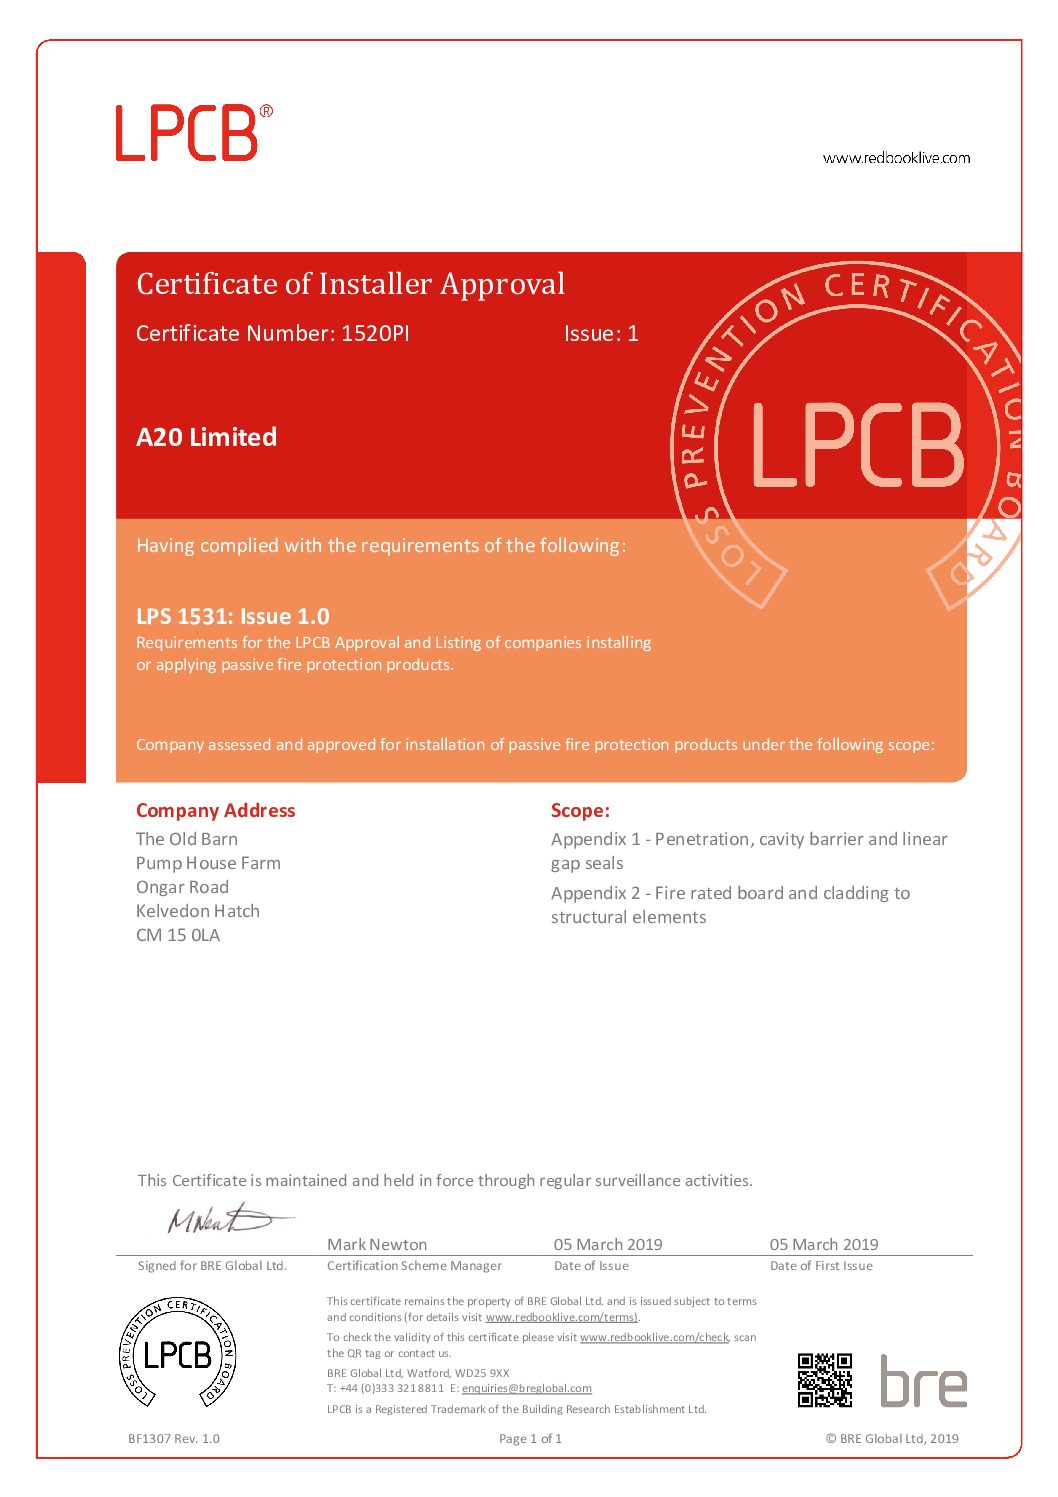 Lpcb Certificate Of Installer Approval - Cert No 1520Pi